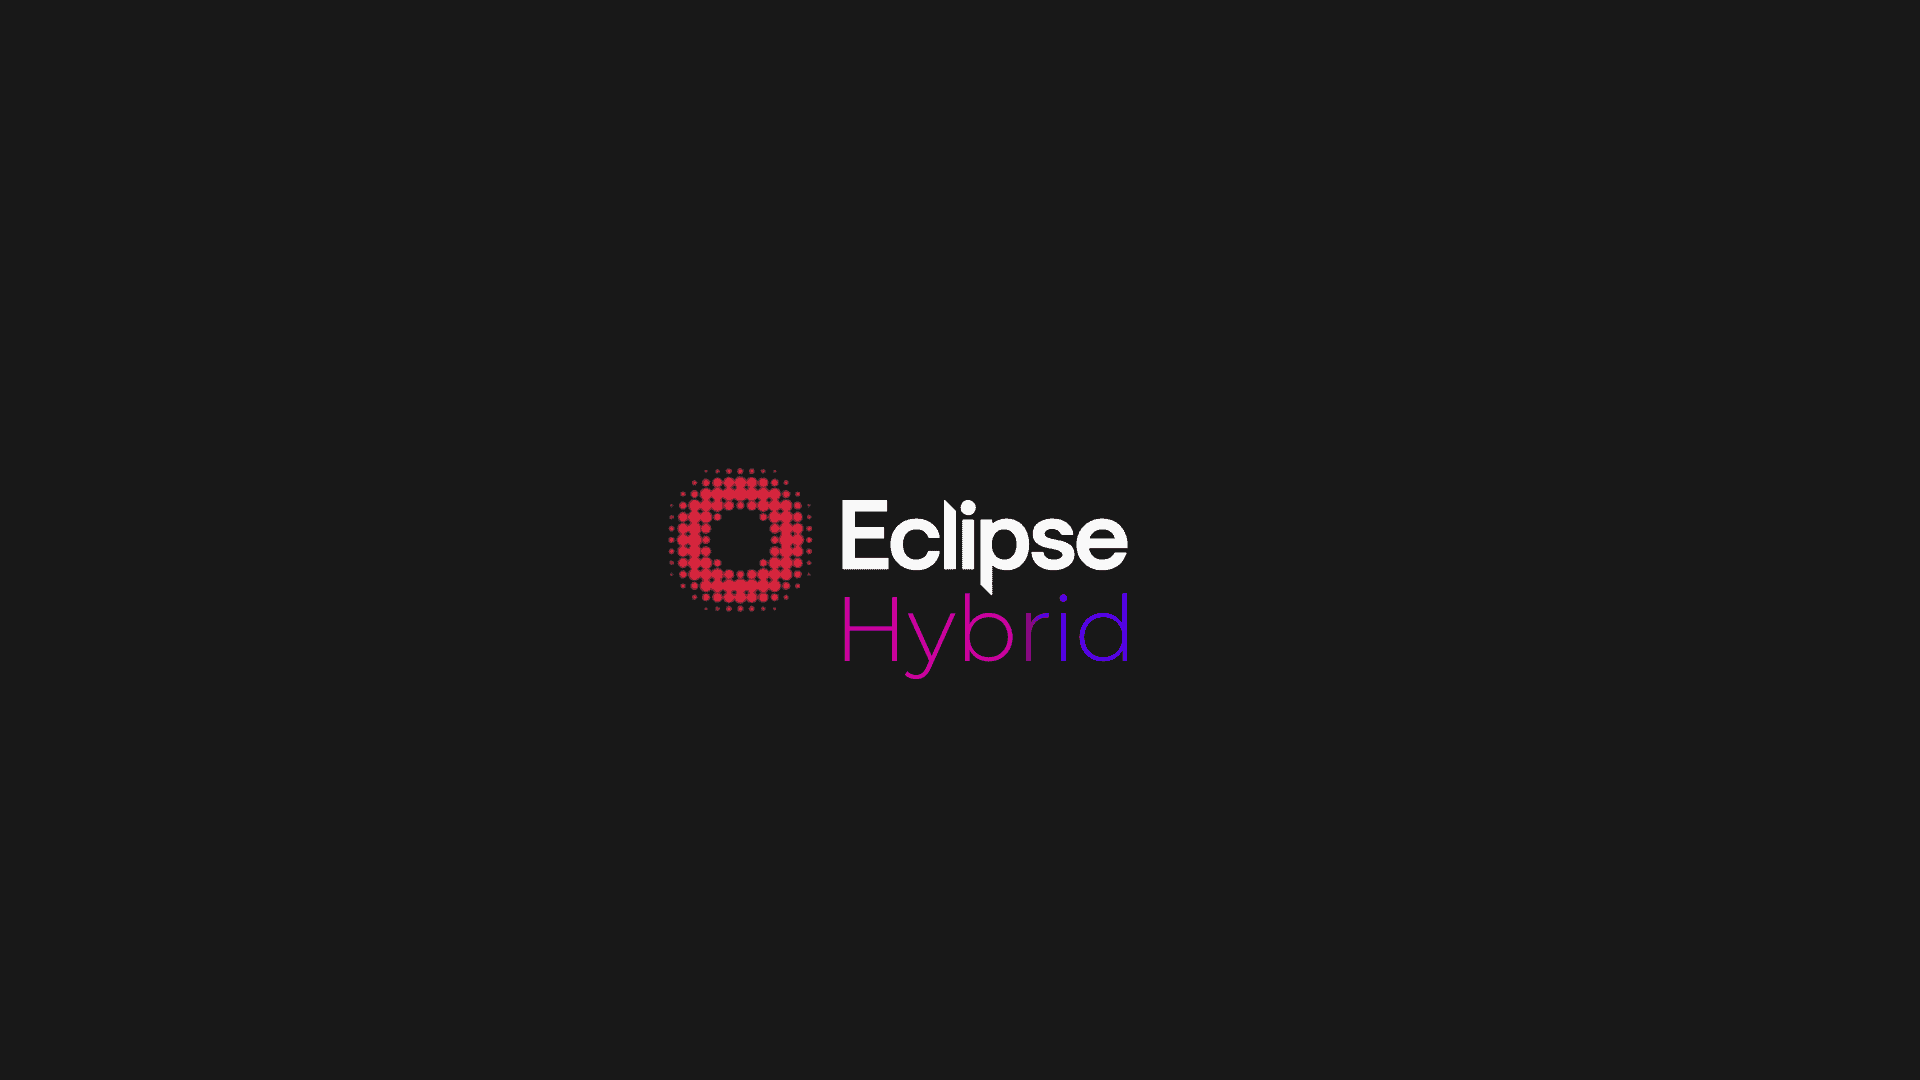 Eclipse Hybrid